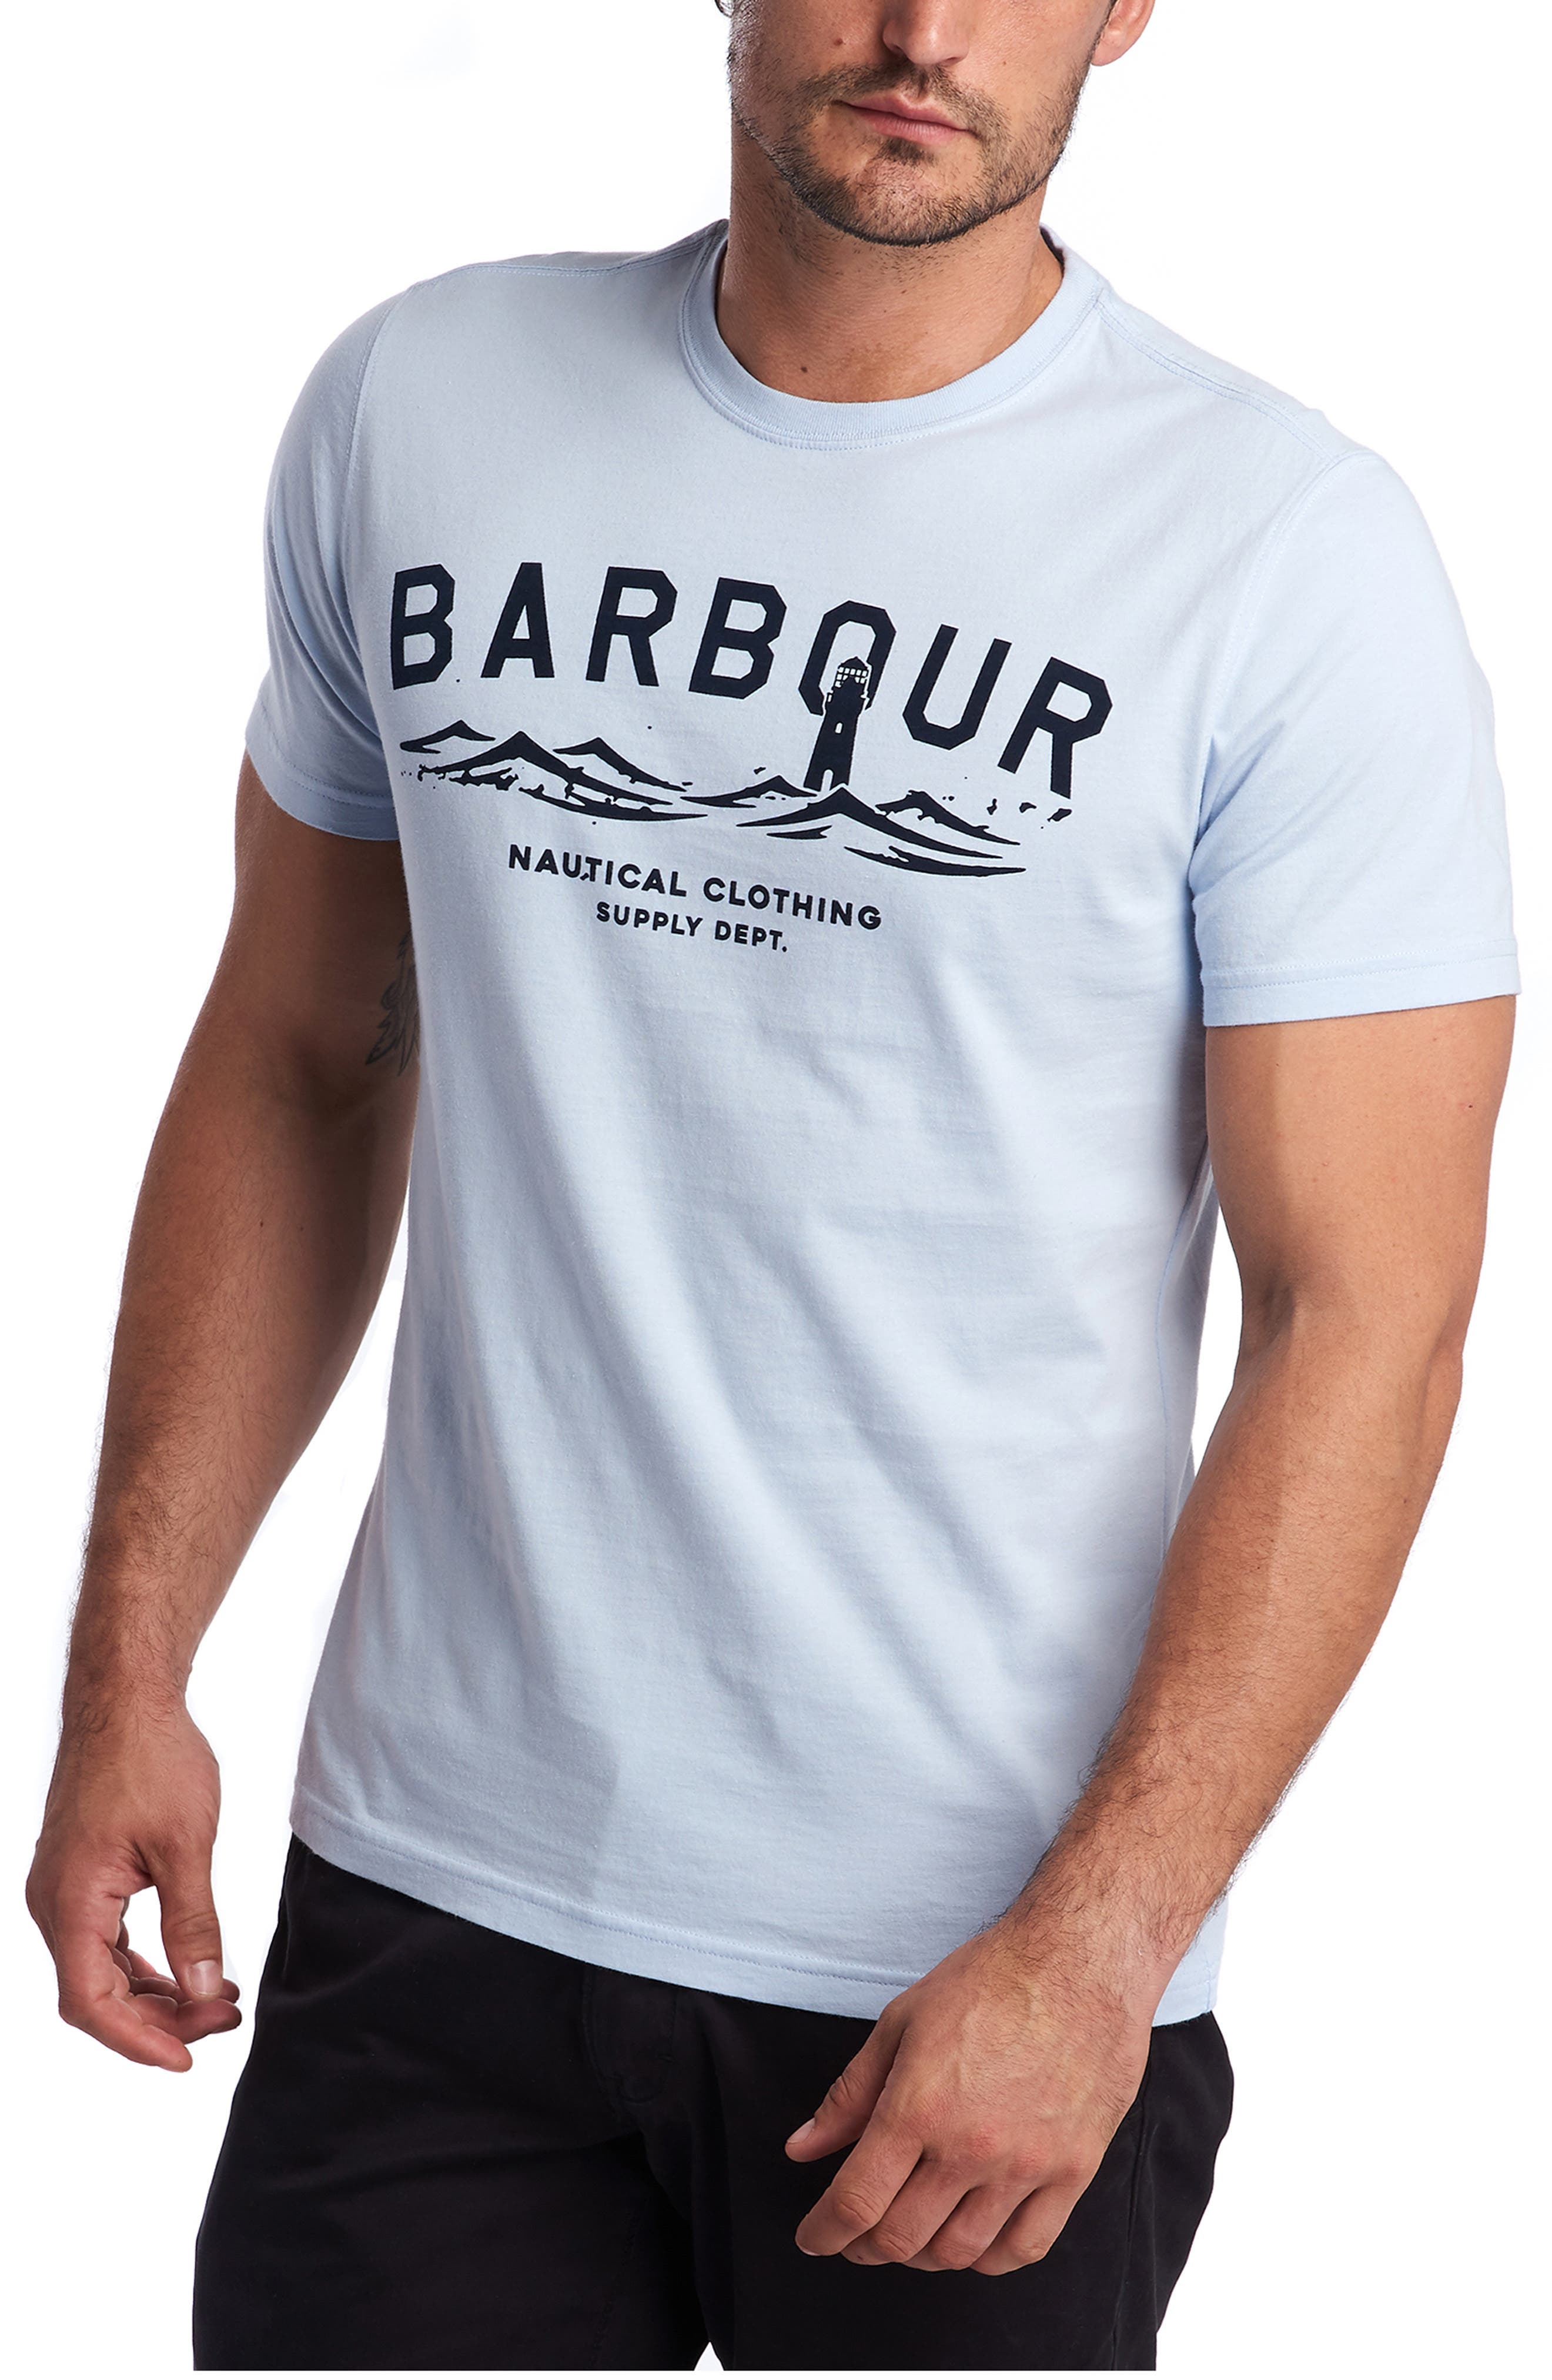 Men's Barbour T-Shirts, Tank Tops 